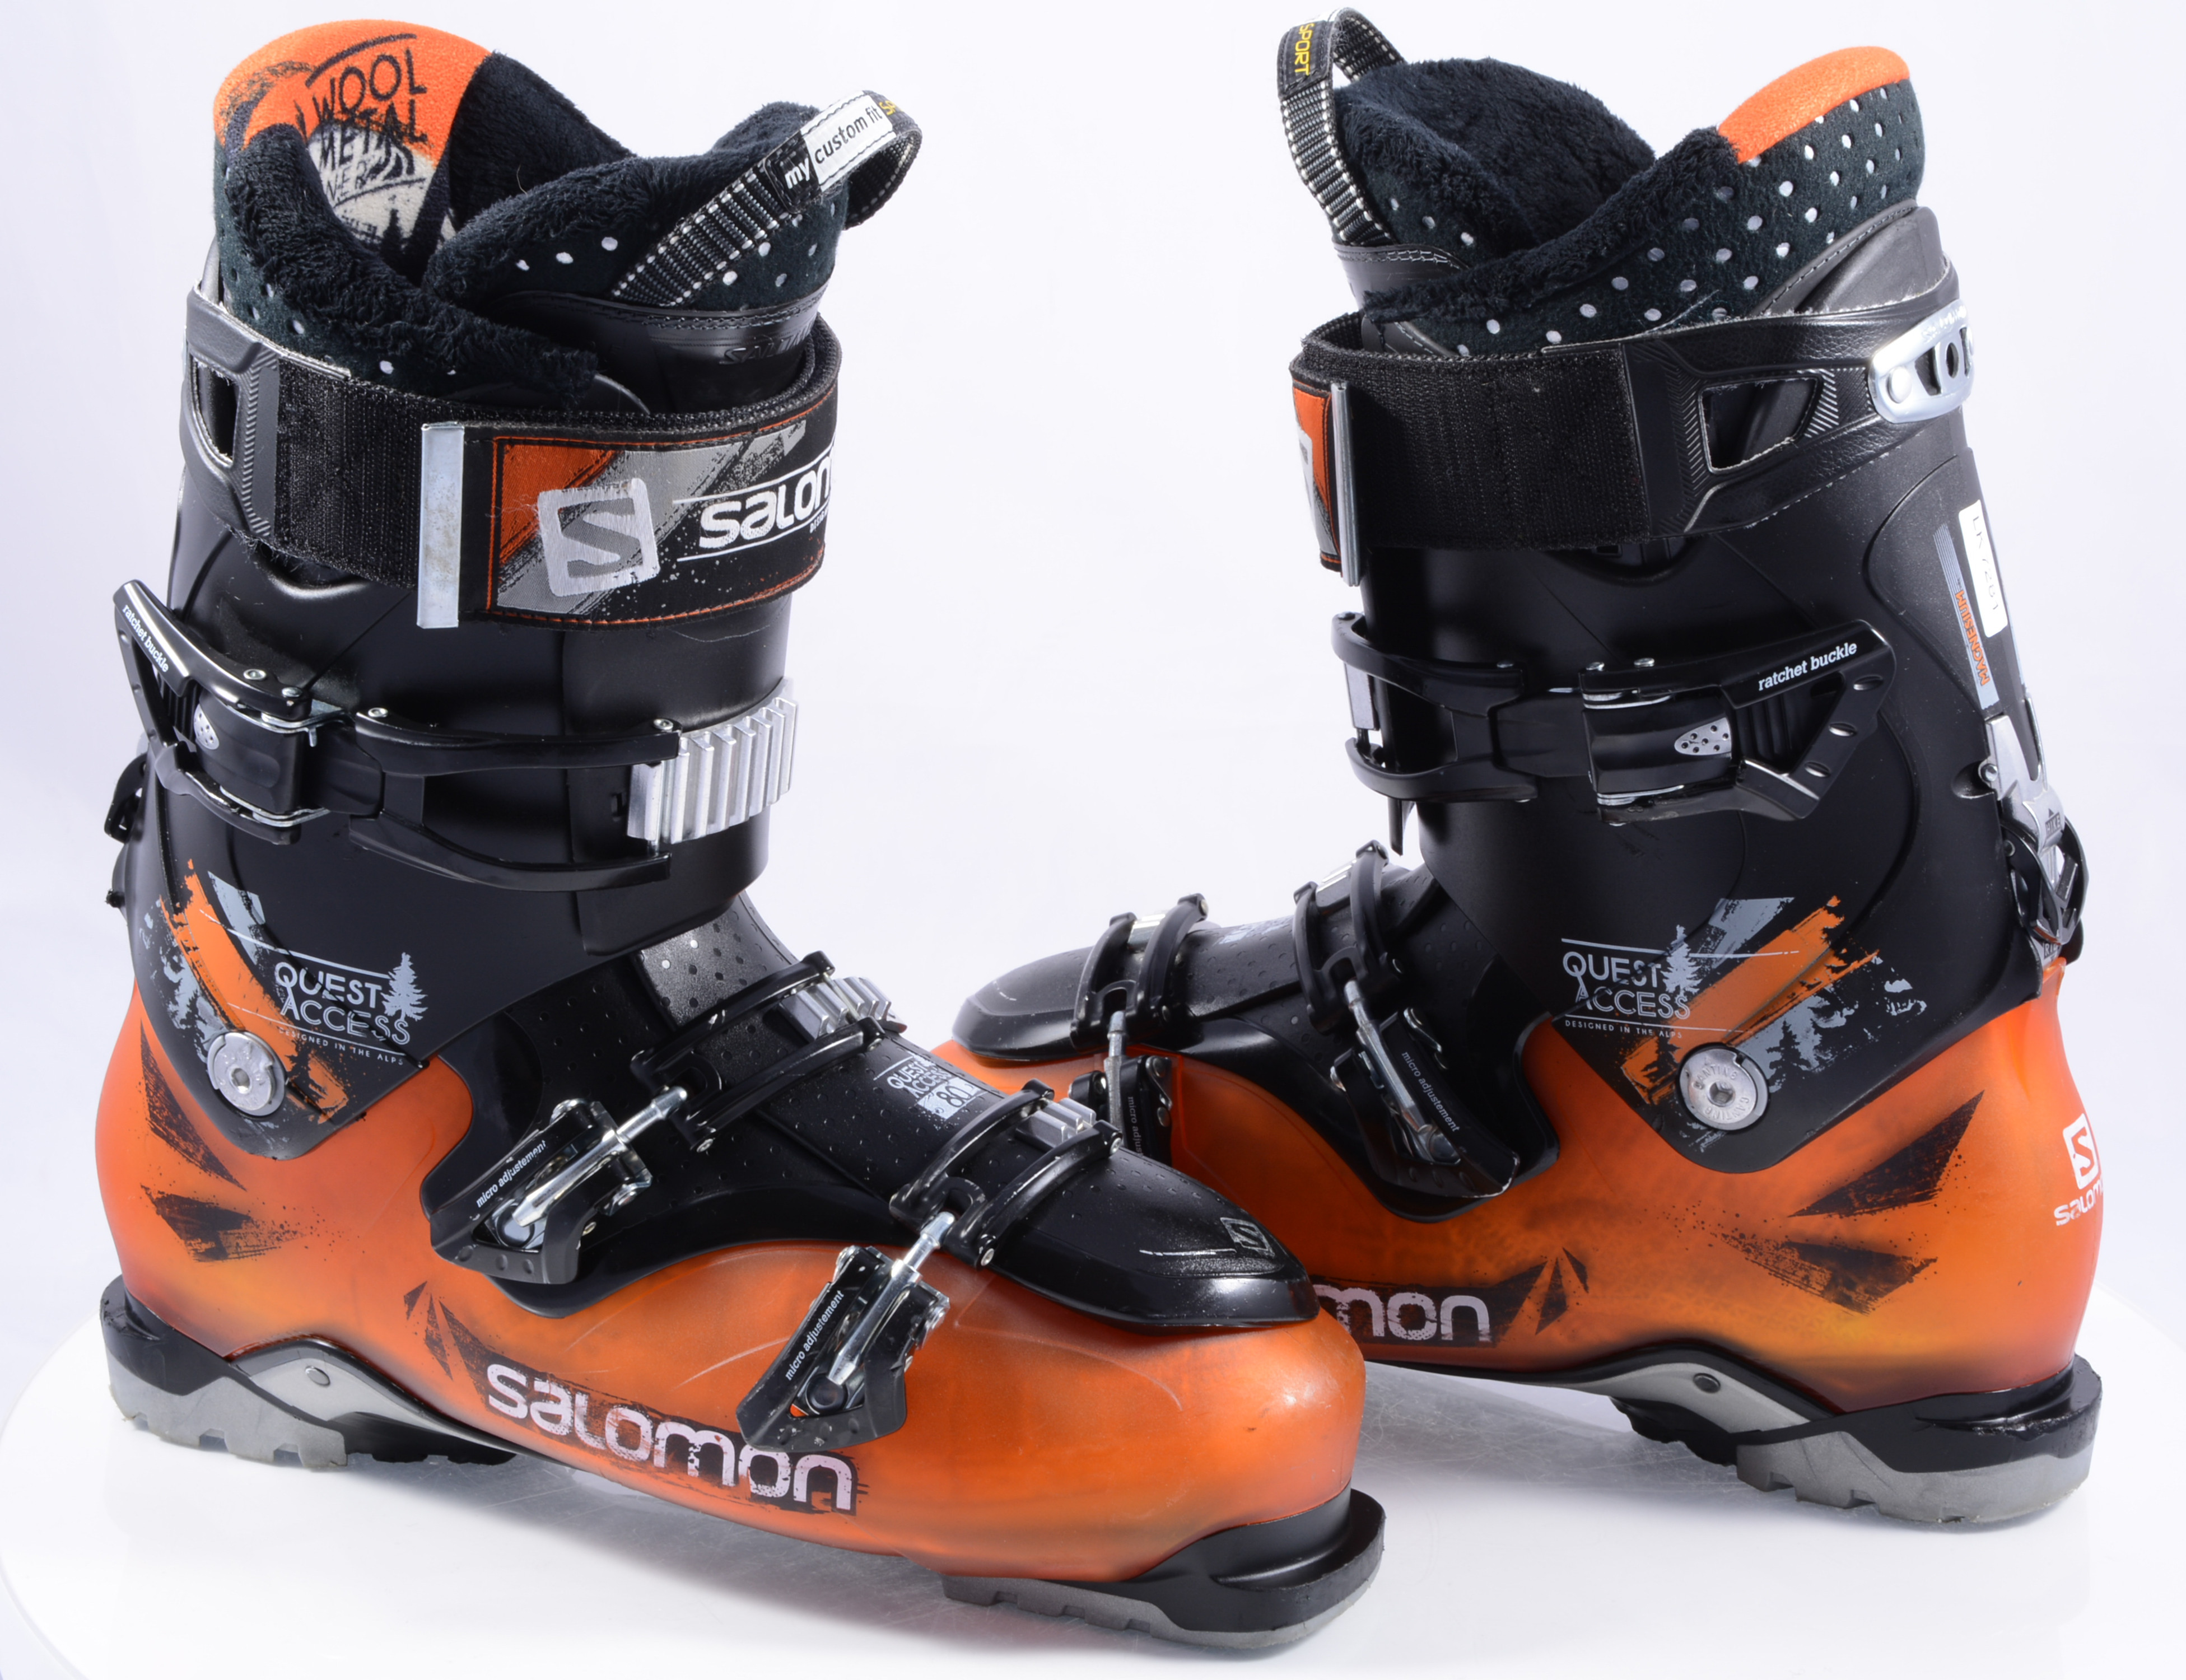 ski boots SALOMON QUEST 80, Ratchet buckle, SKI/WALK, micro, ( TOP condition ) Mardosport.com